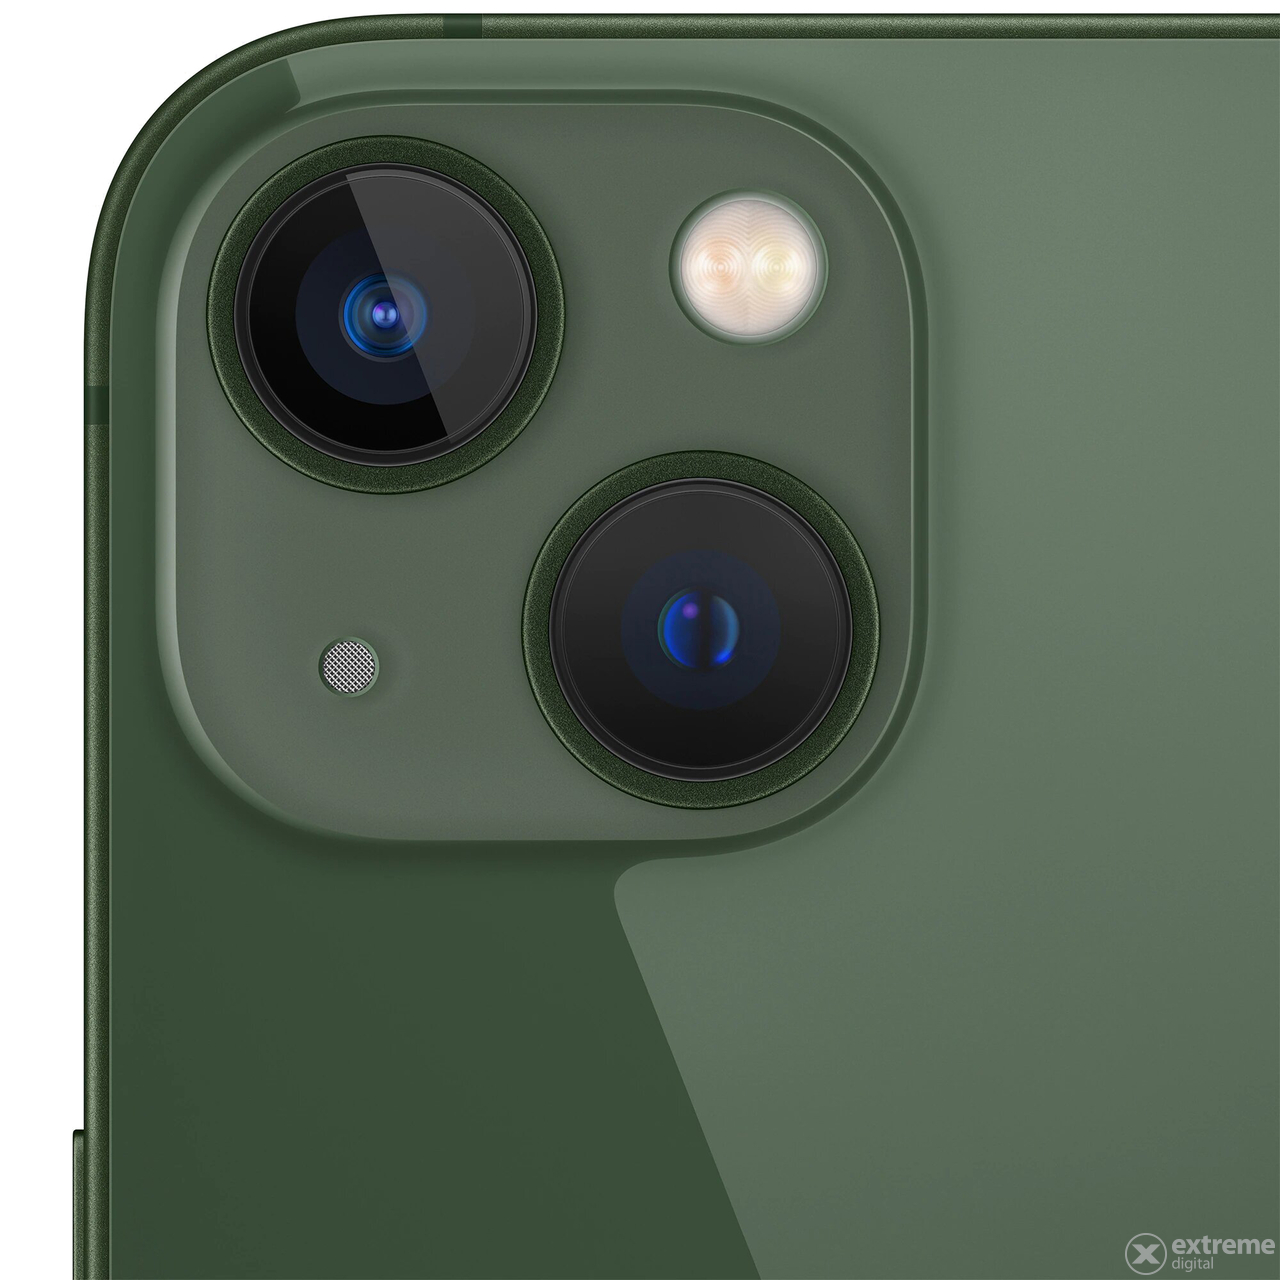 Apple iPhone 13 5G 128GB (mngkhu/a), zelený